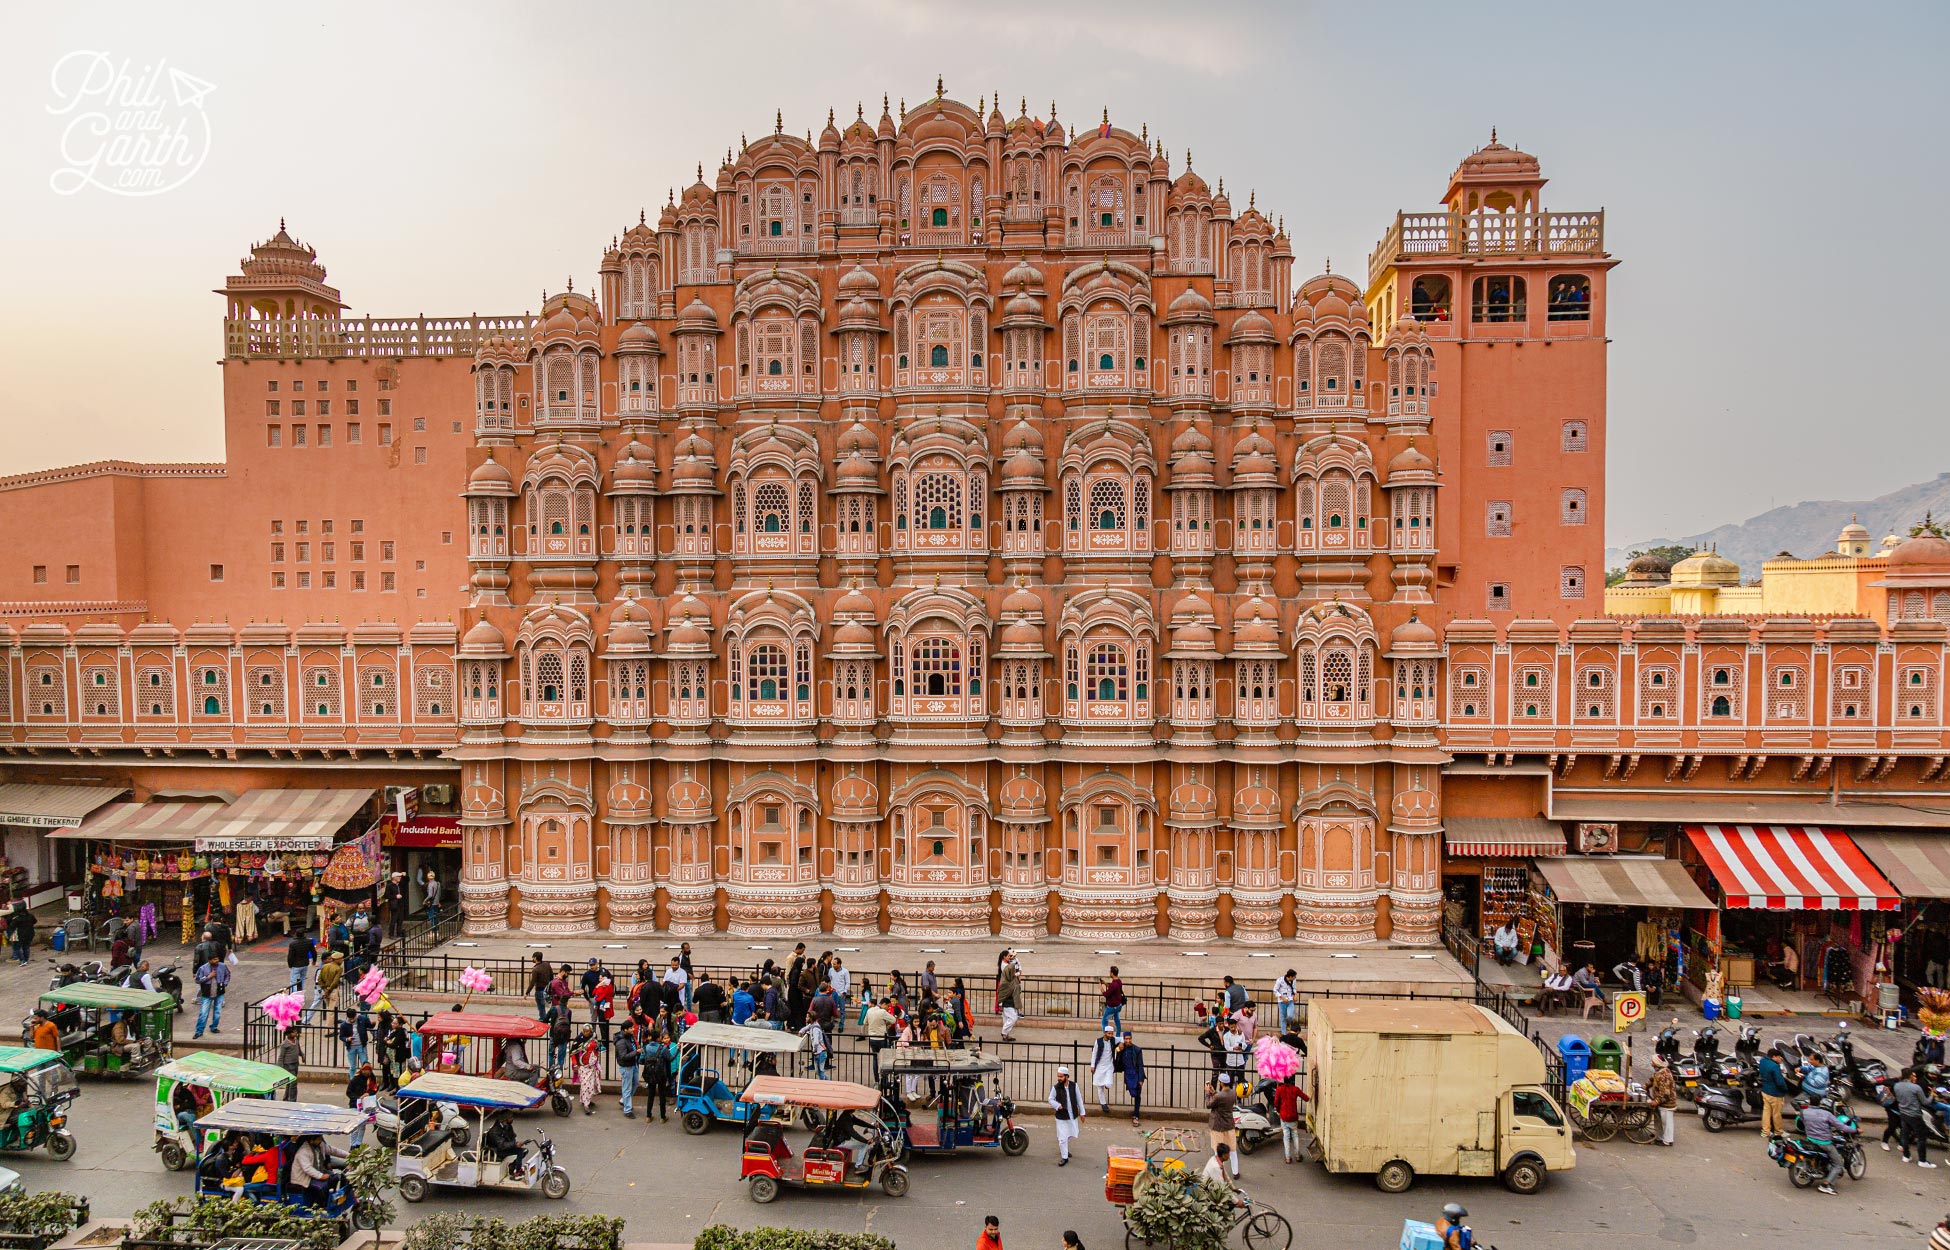 Jaipur's Hawa Mahal - The Palace Of The Winds